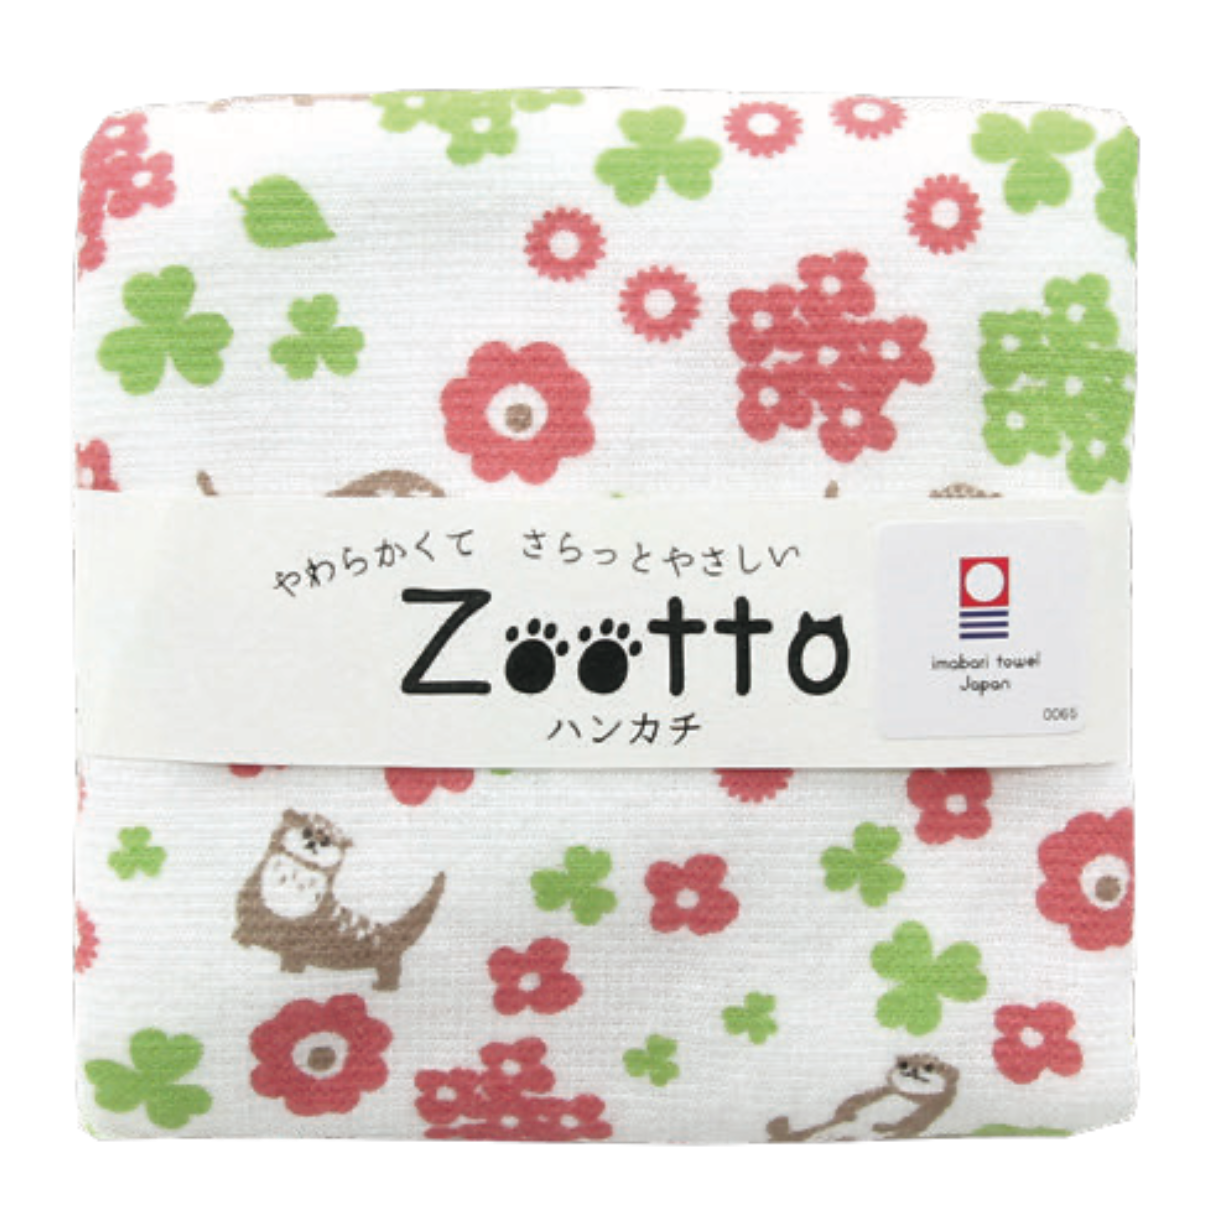 Zootto 今治タオル ハンカチ(手帕/Handkerchief)